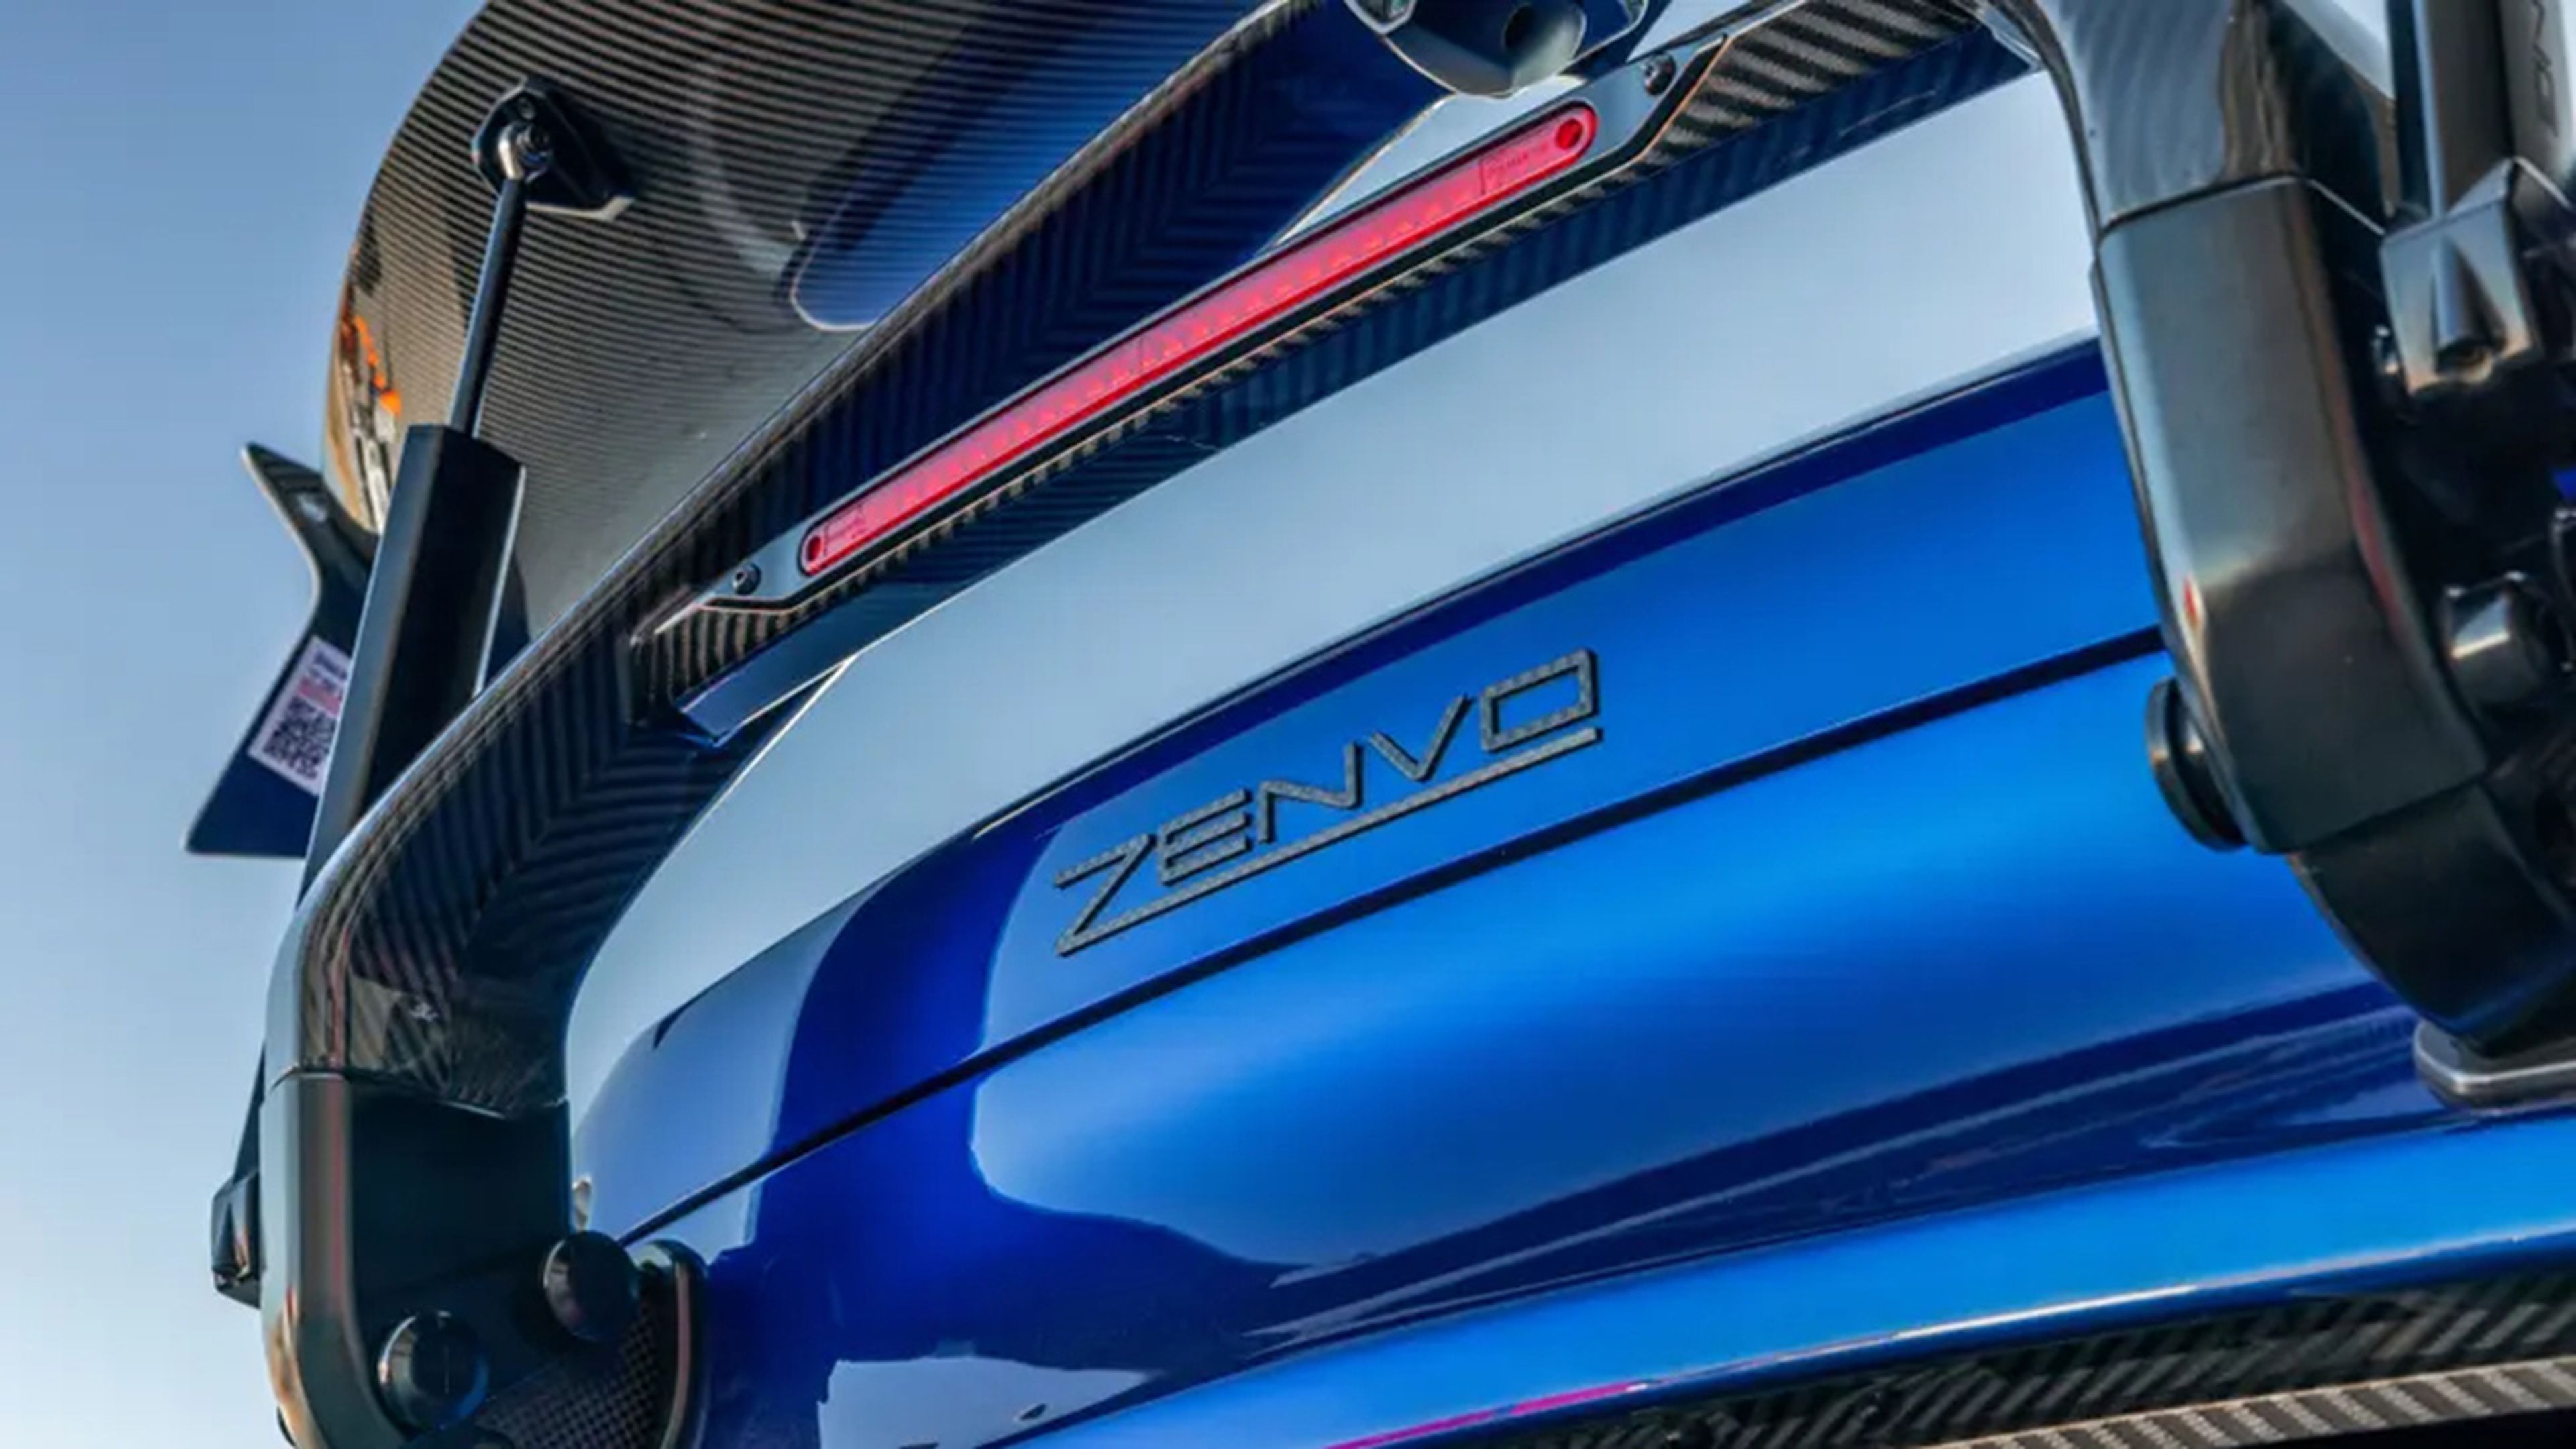 Zenvo Automotive